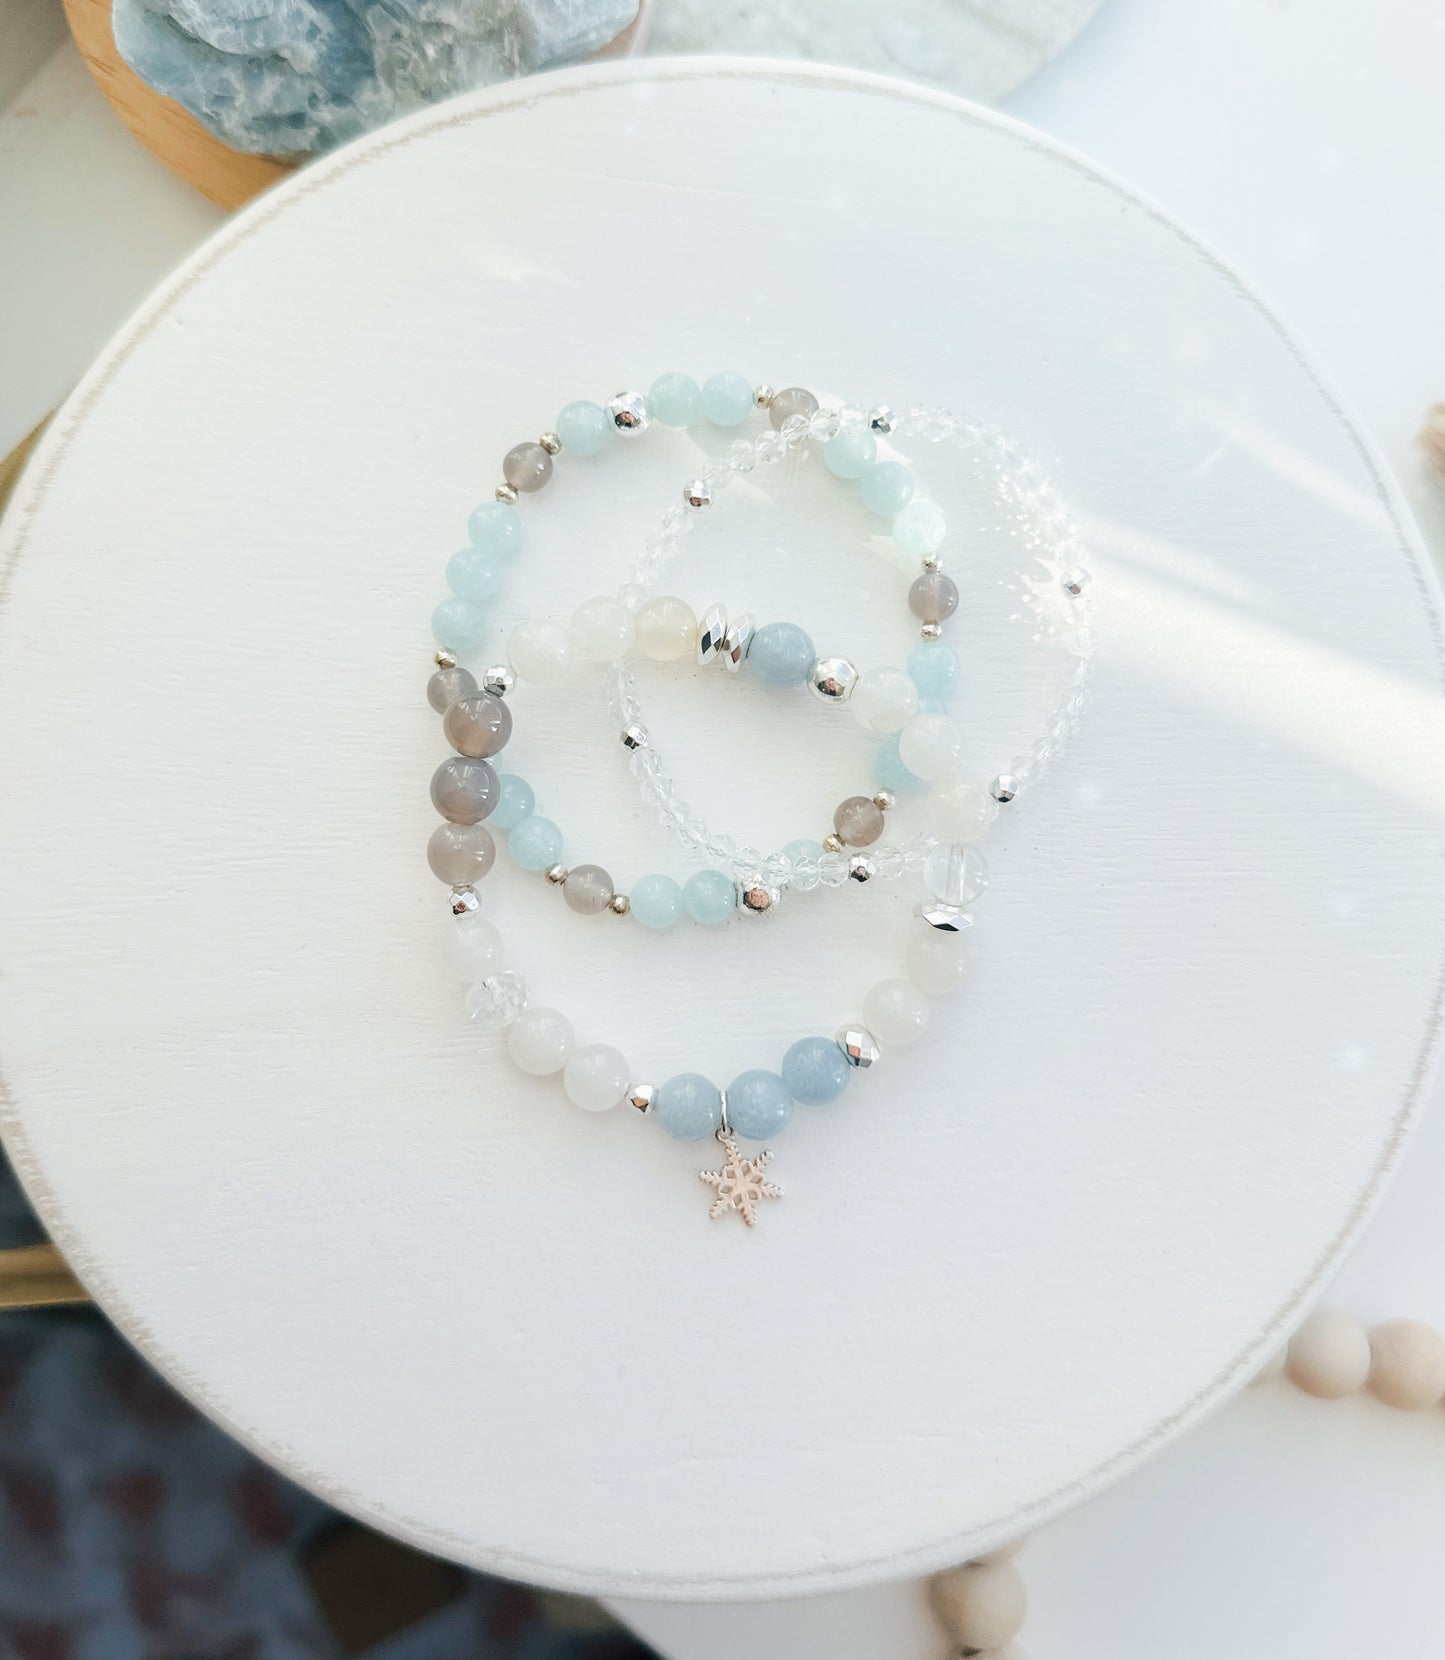 The Snowflake bracelet set